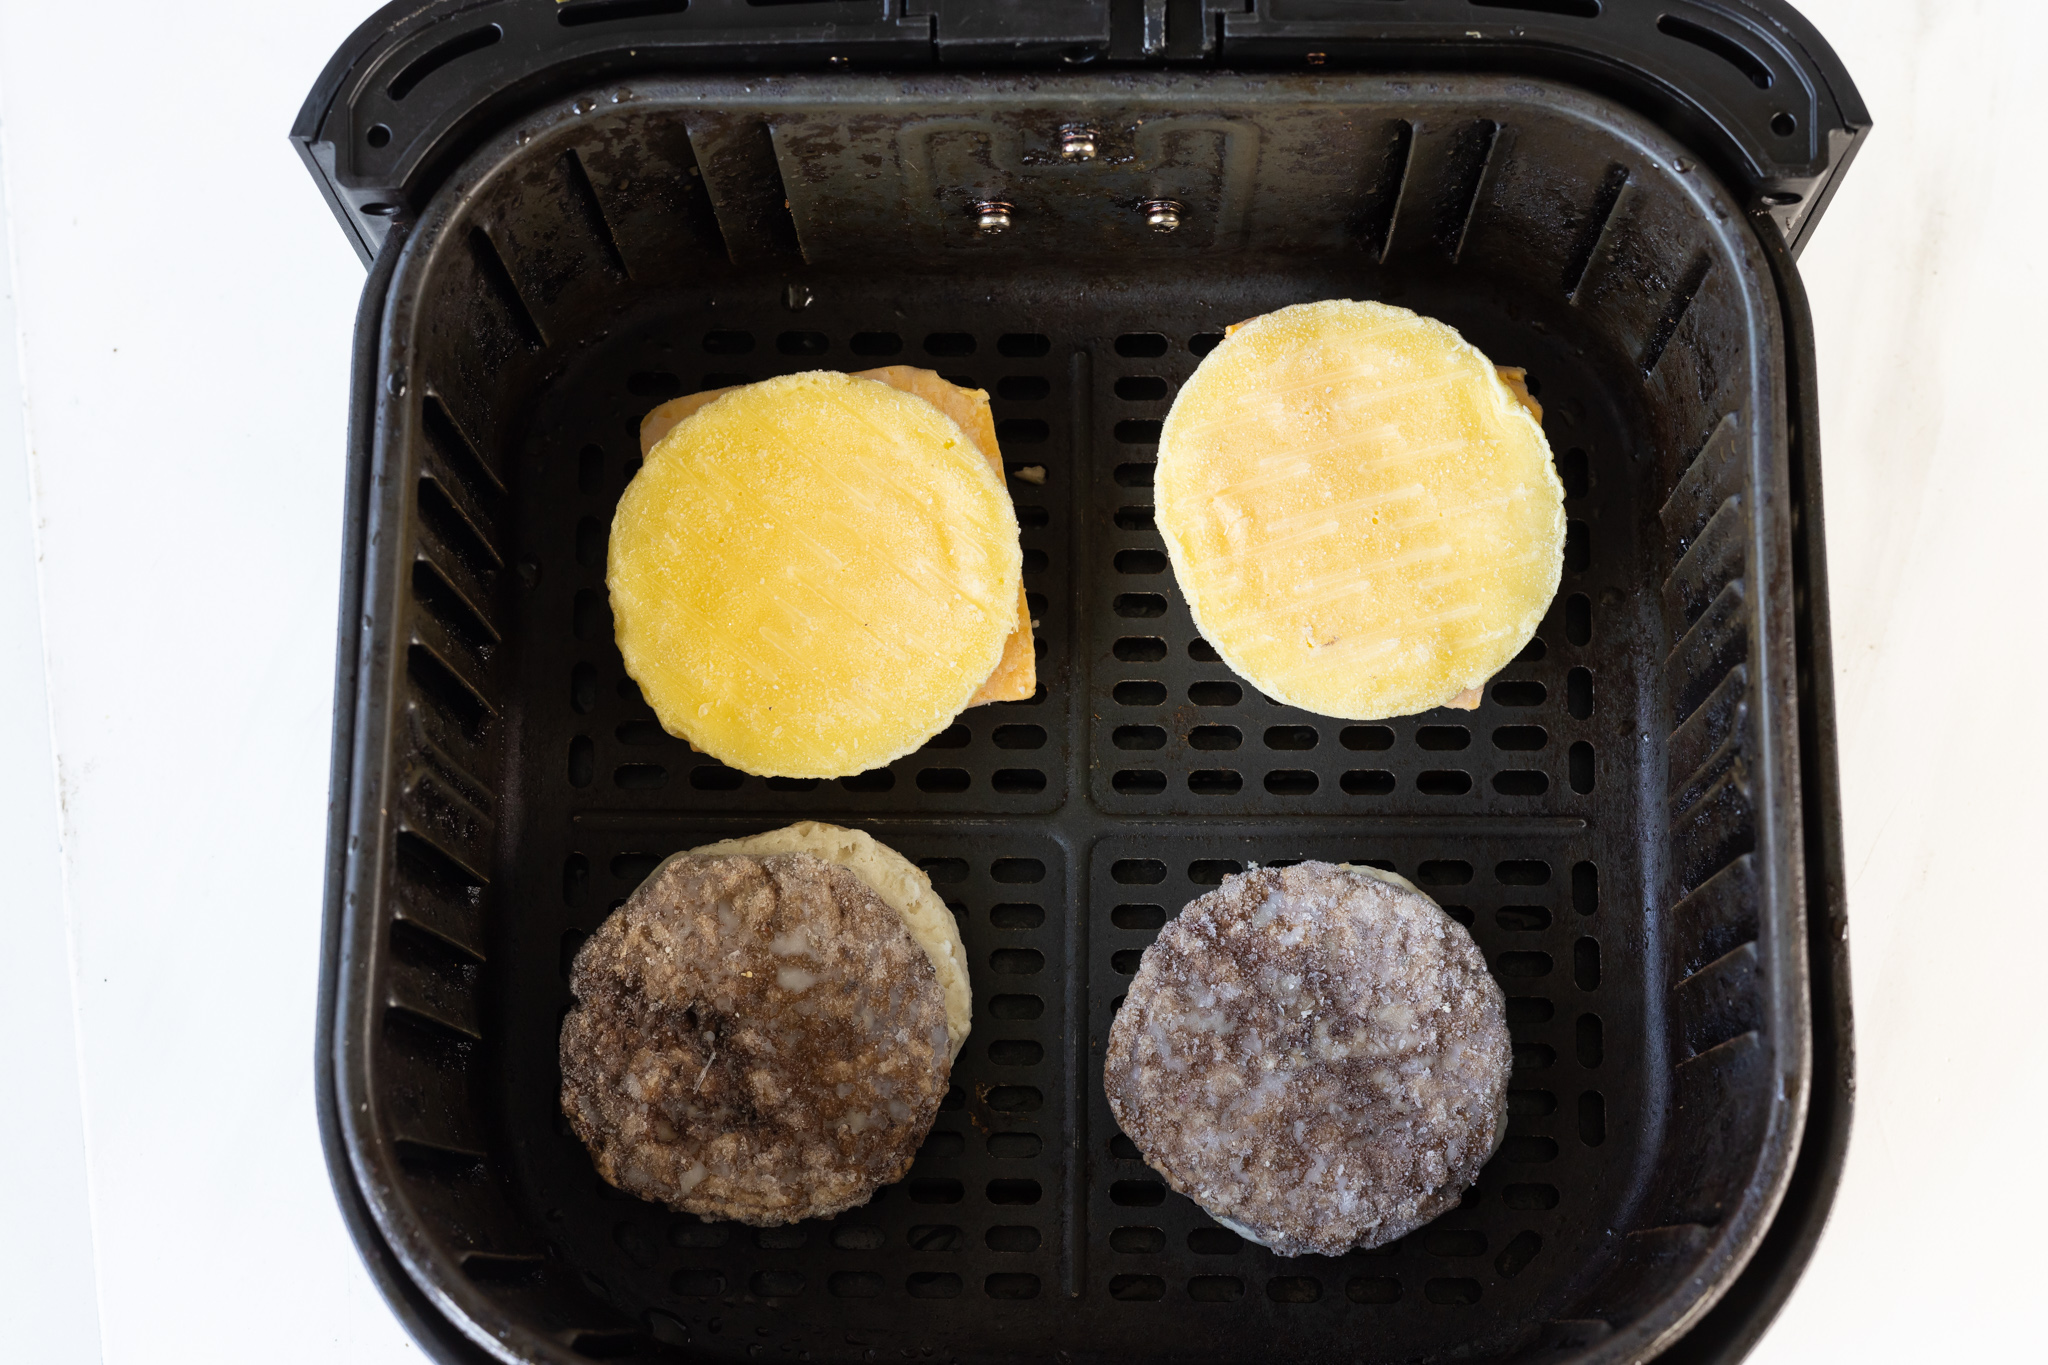 separated breakfast sandwiches in air fryer basket